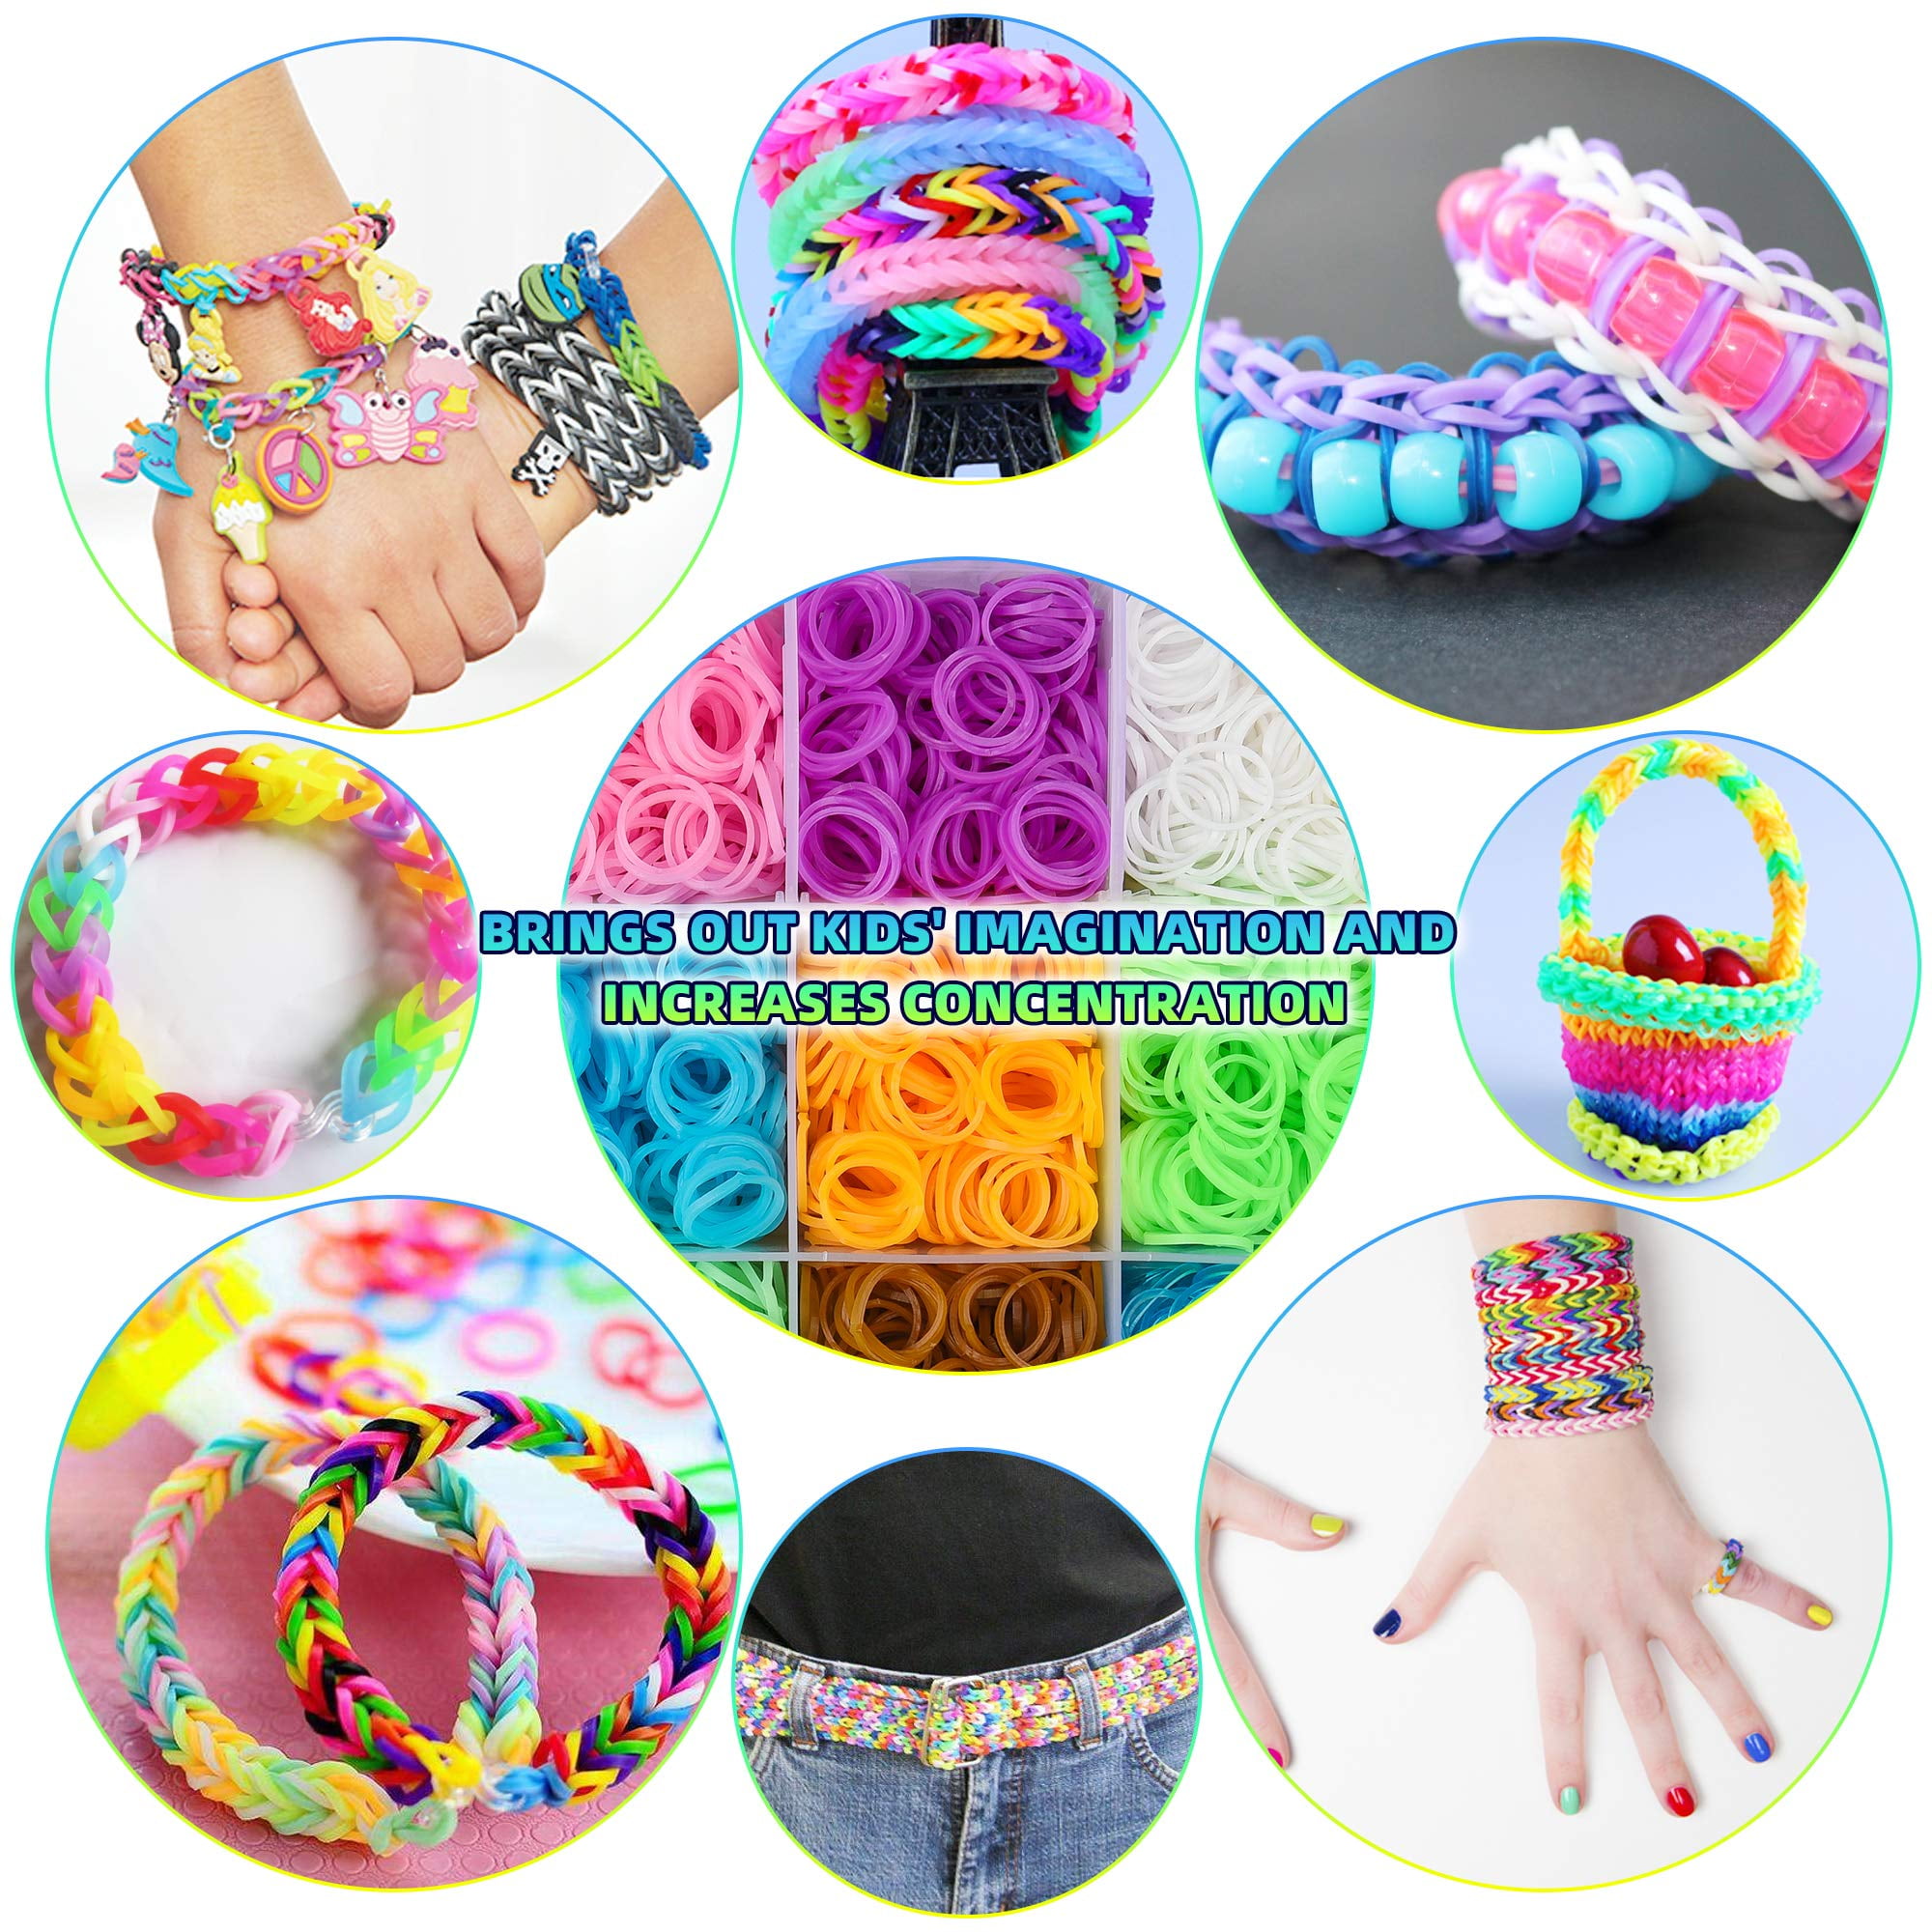 MUDO NEST 20000+Loom Bands Kit:19,000 DIY Rubber Bands Kits 38 Unique  Colors500 Clips,40 CharmsLoom Bracelet Making Kits for Kids